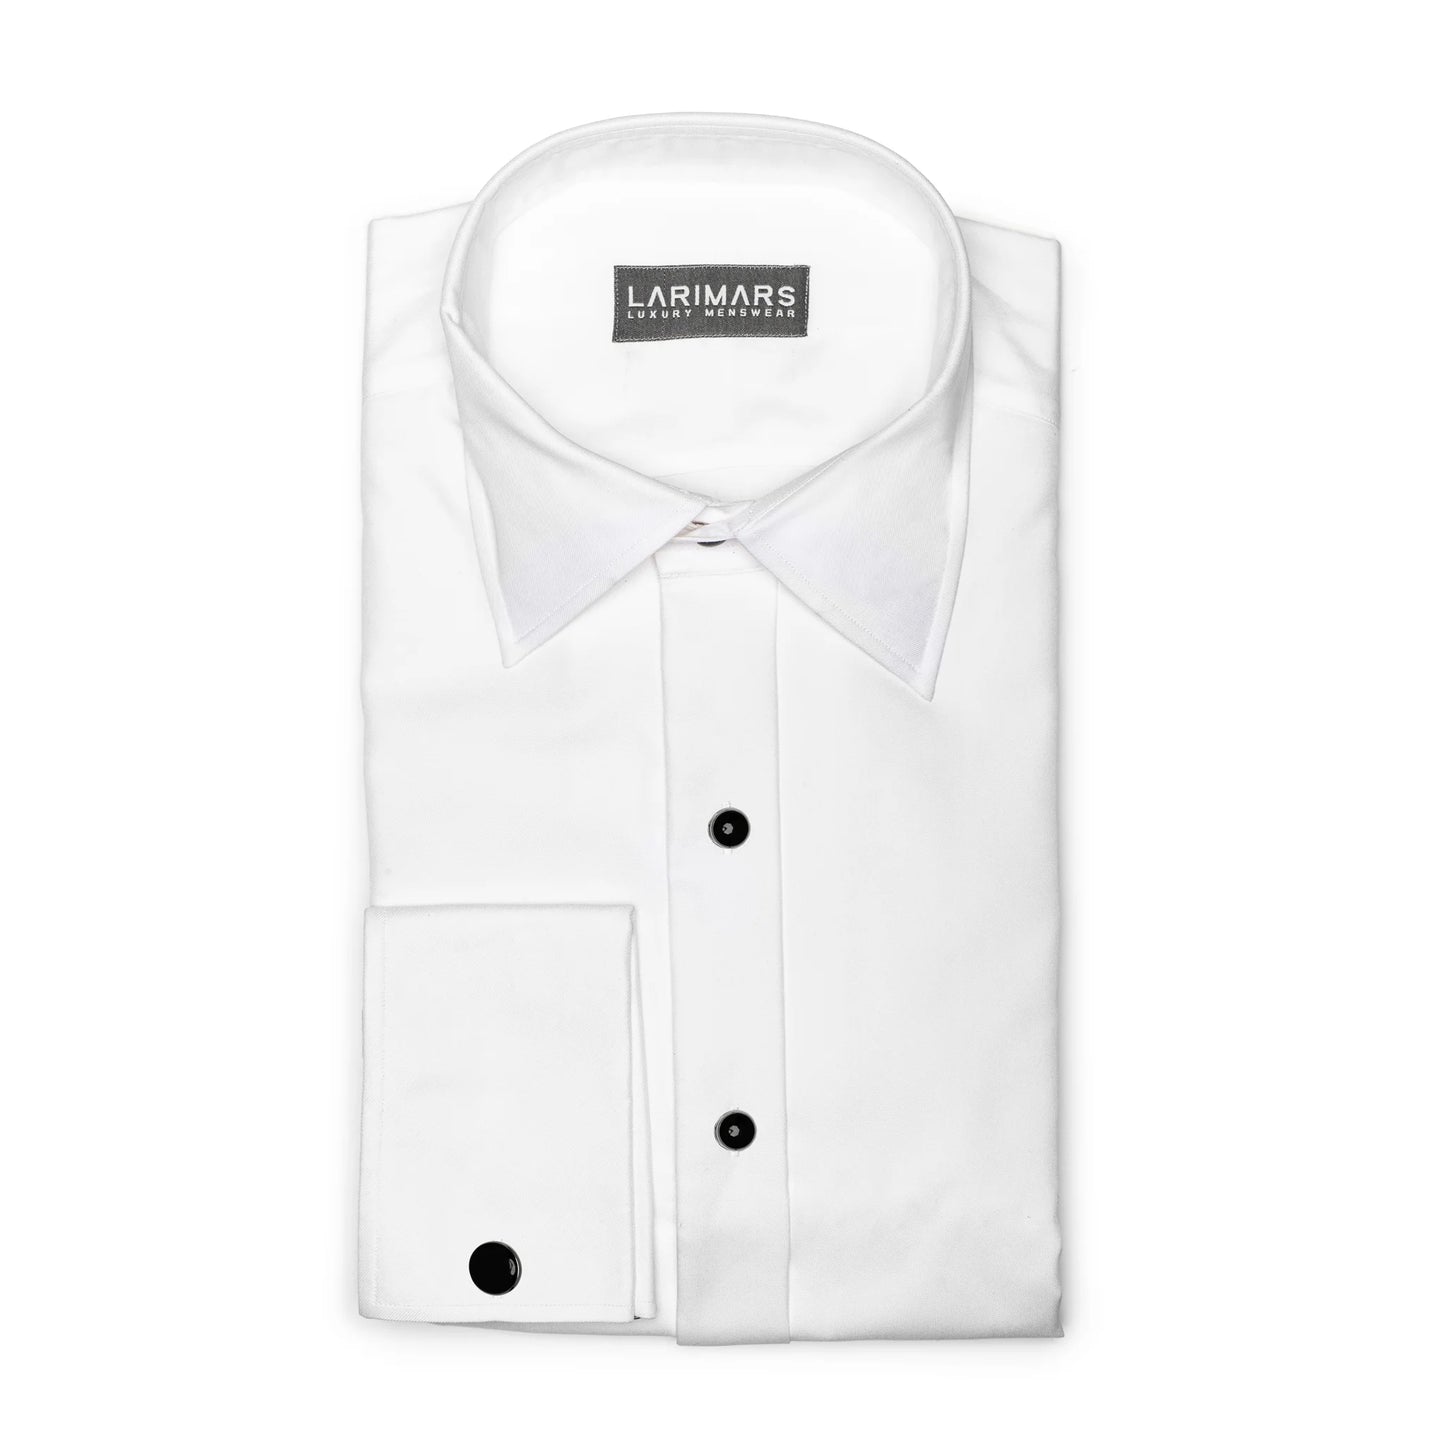 Pique Bib Tuxedo Shirt - Larimars Clothing Men's Formal and casual wear shirts